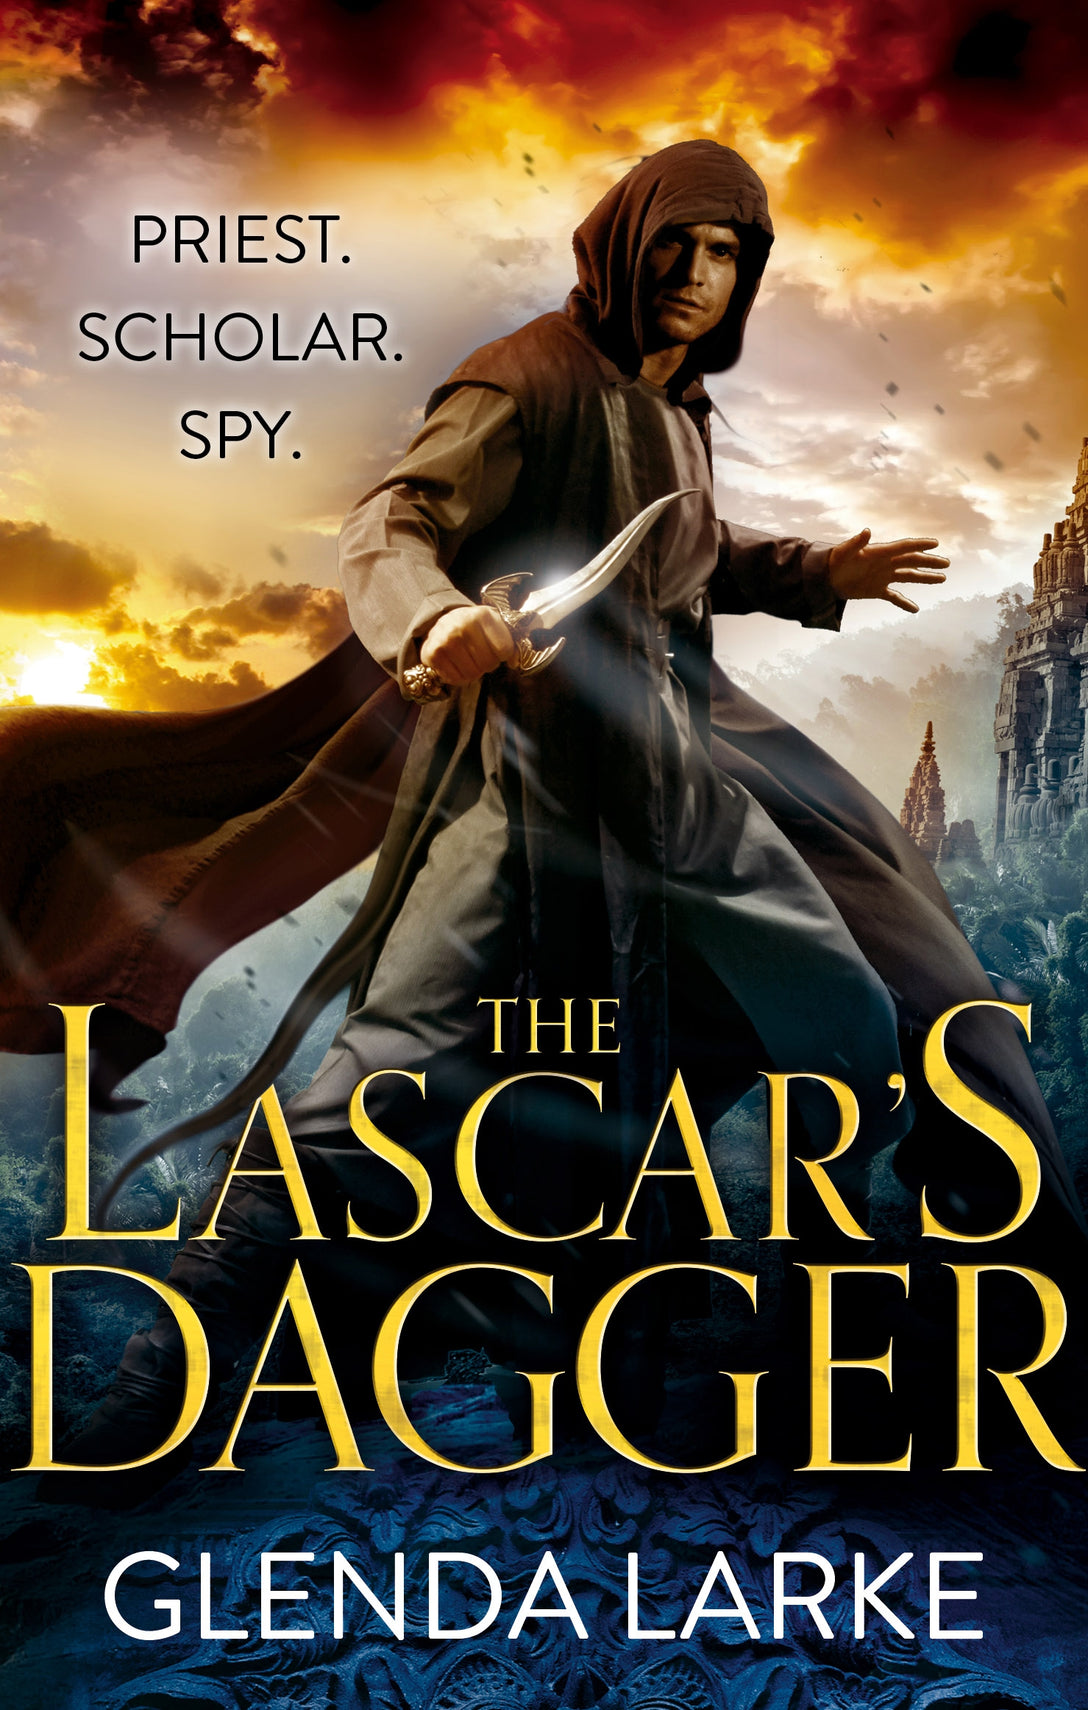 The Lascar's Dagger by Glenda Larke